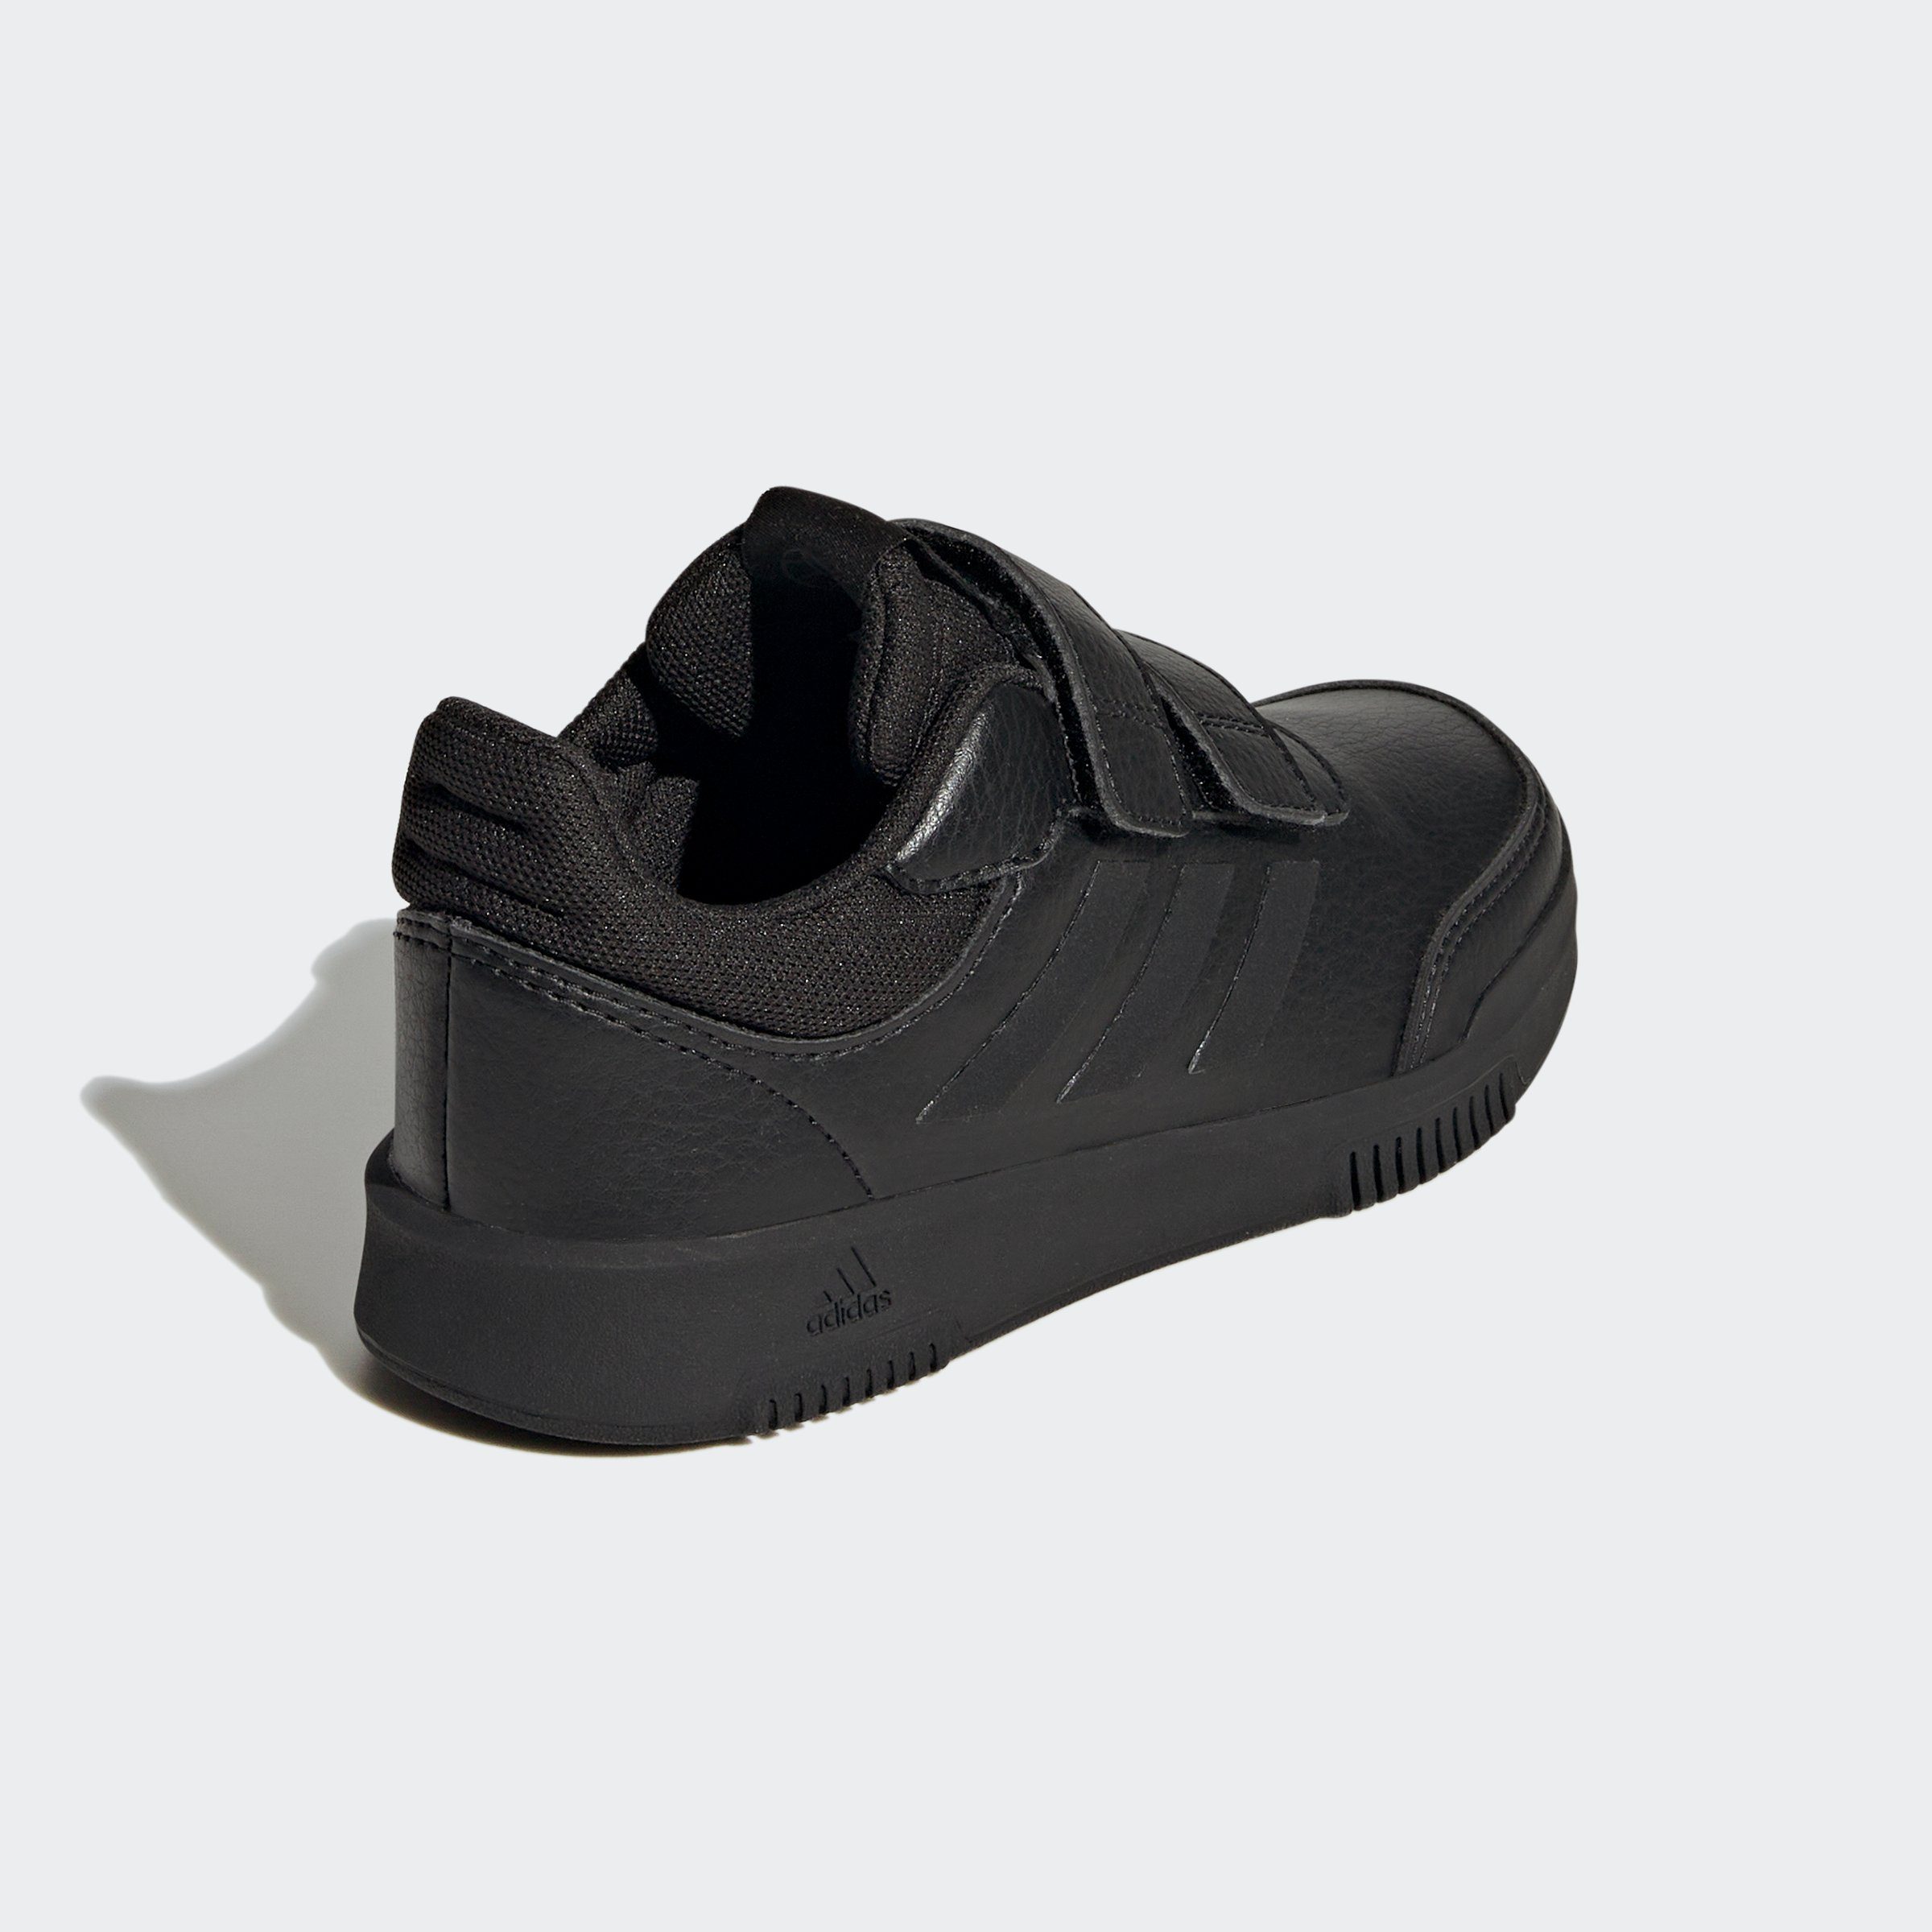 AND TENSAUR Core Grey / Black Black Klettschuh mit Six / adidas LOOP Core HOOK Sportswear Klettverschluss